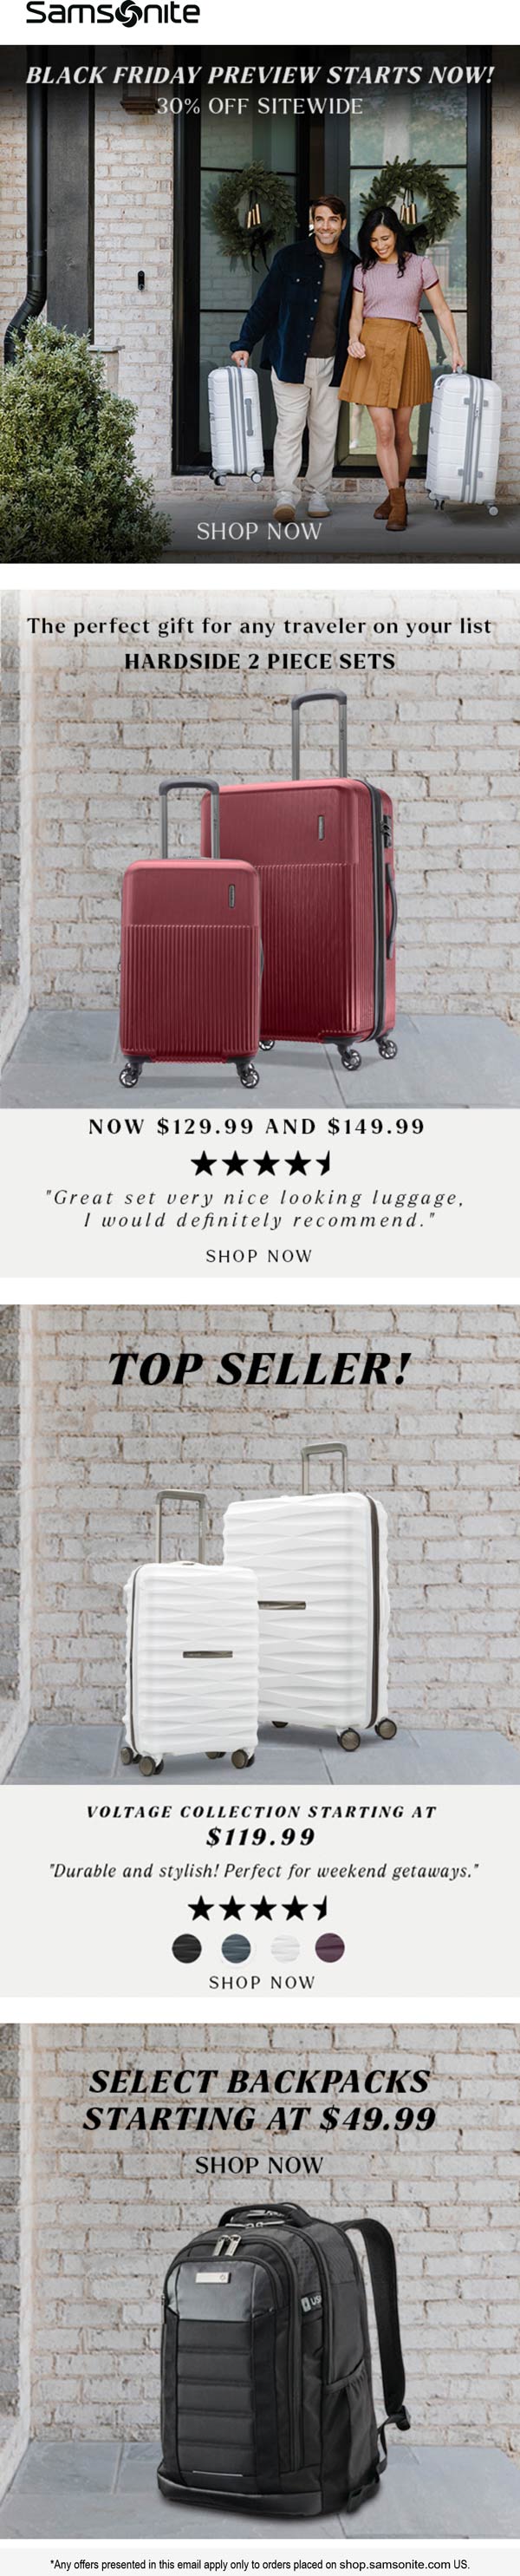 Samsonite stores Coupon  30% off everything online at Samsonite luggage & backpacks #samsonite 